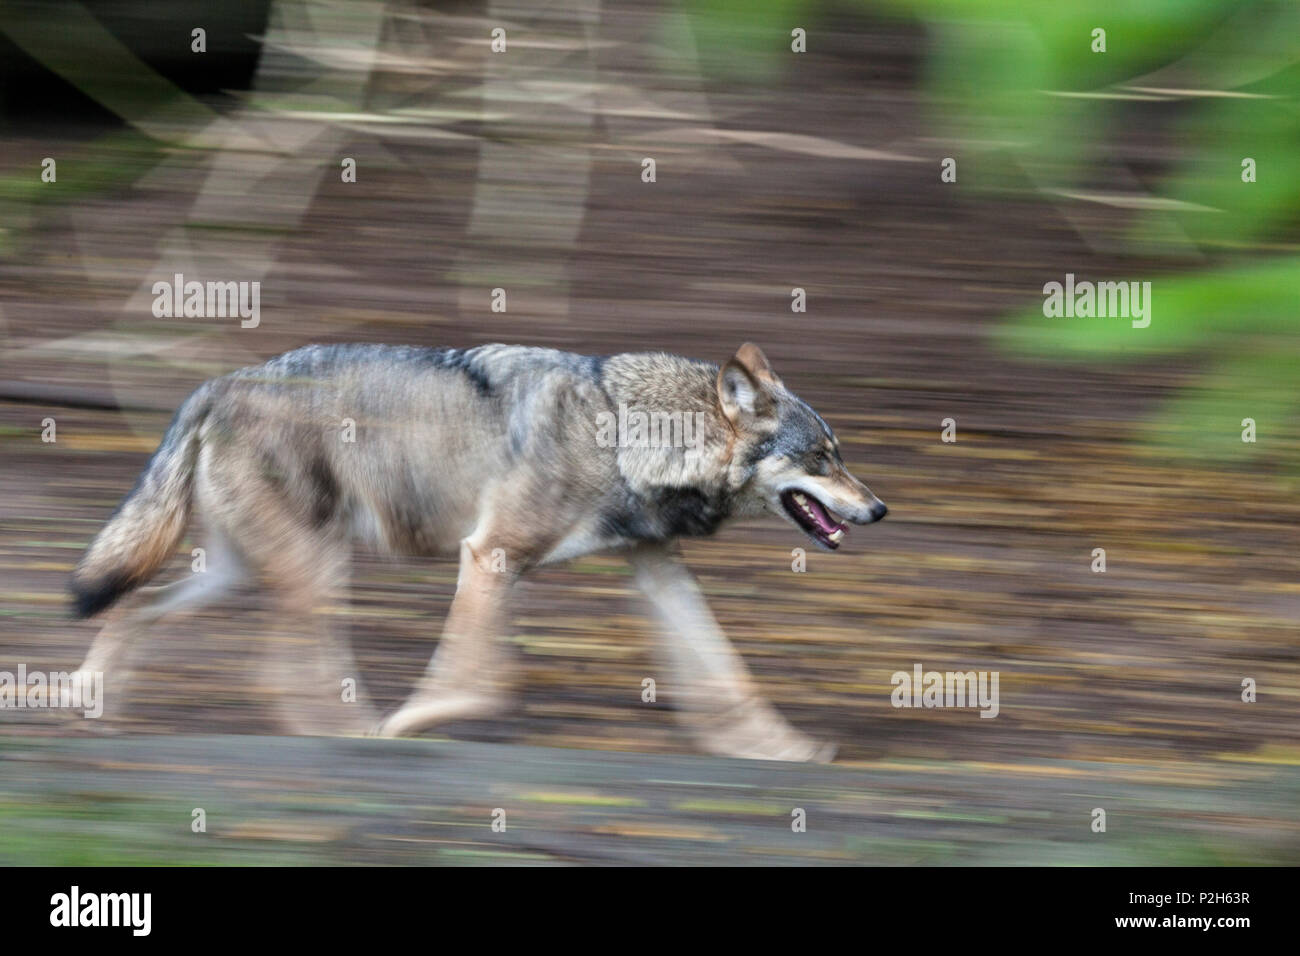 European Wolf running, Canis lupus, Europe, captive Stock Photo